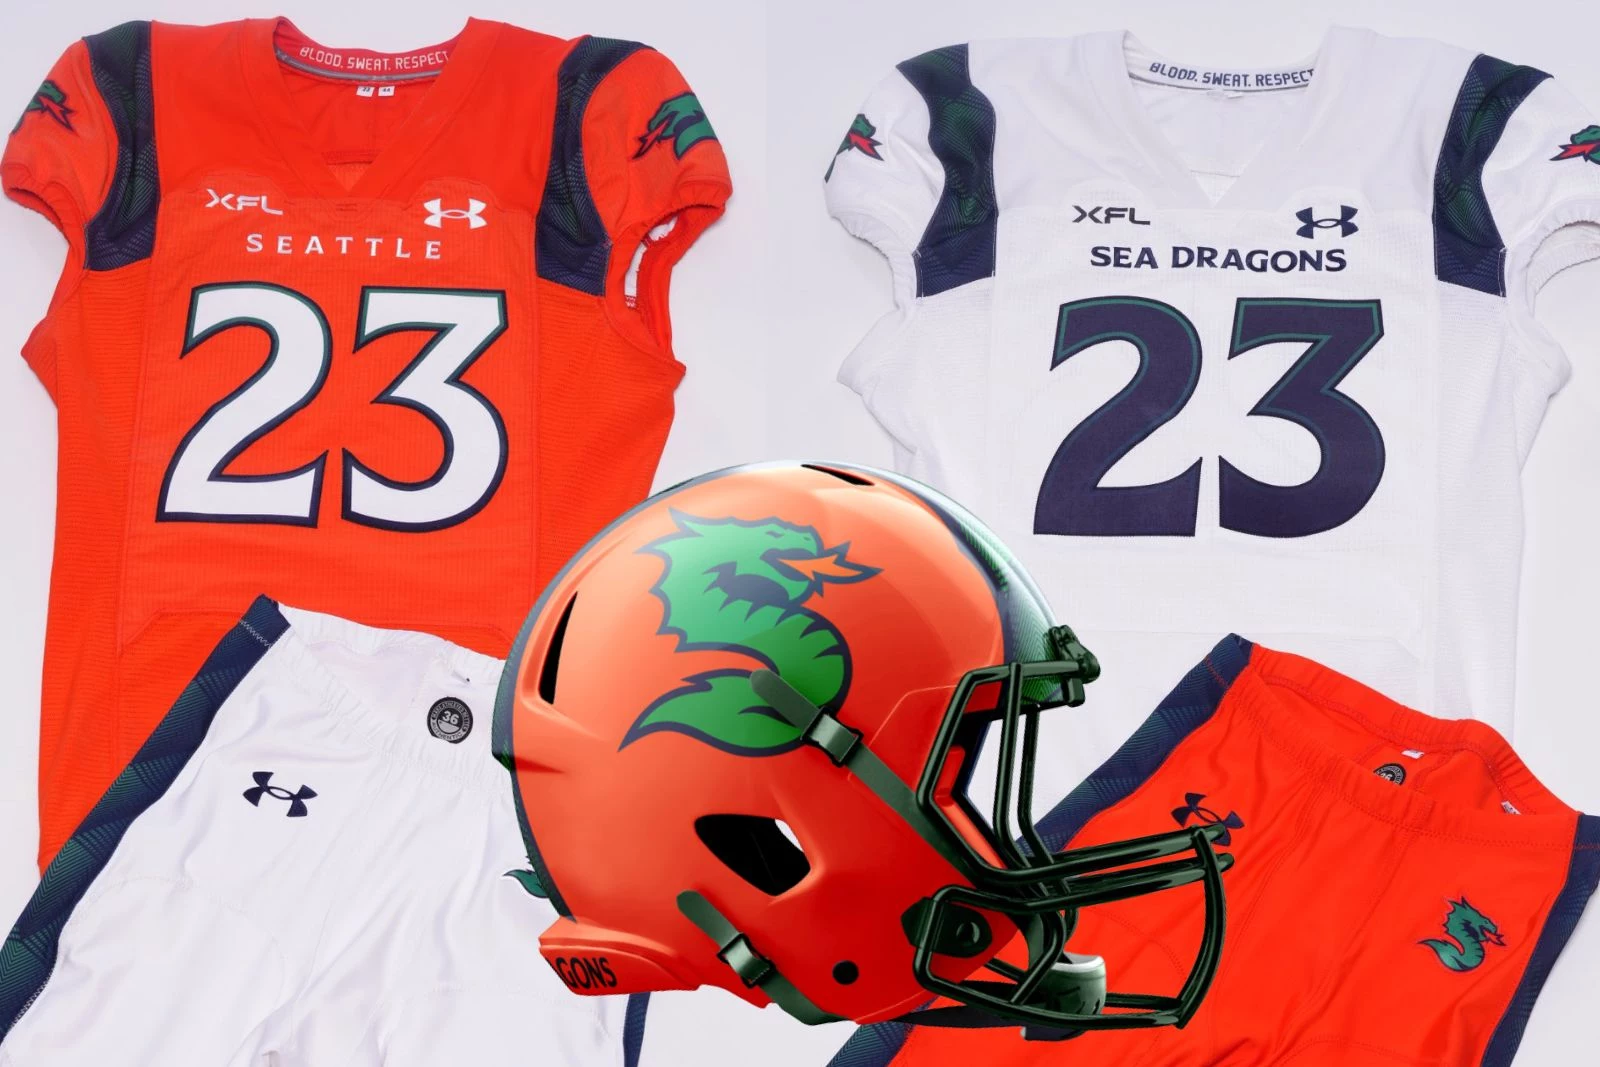 Seattle Dragons' uniforms, helmet